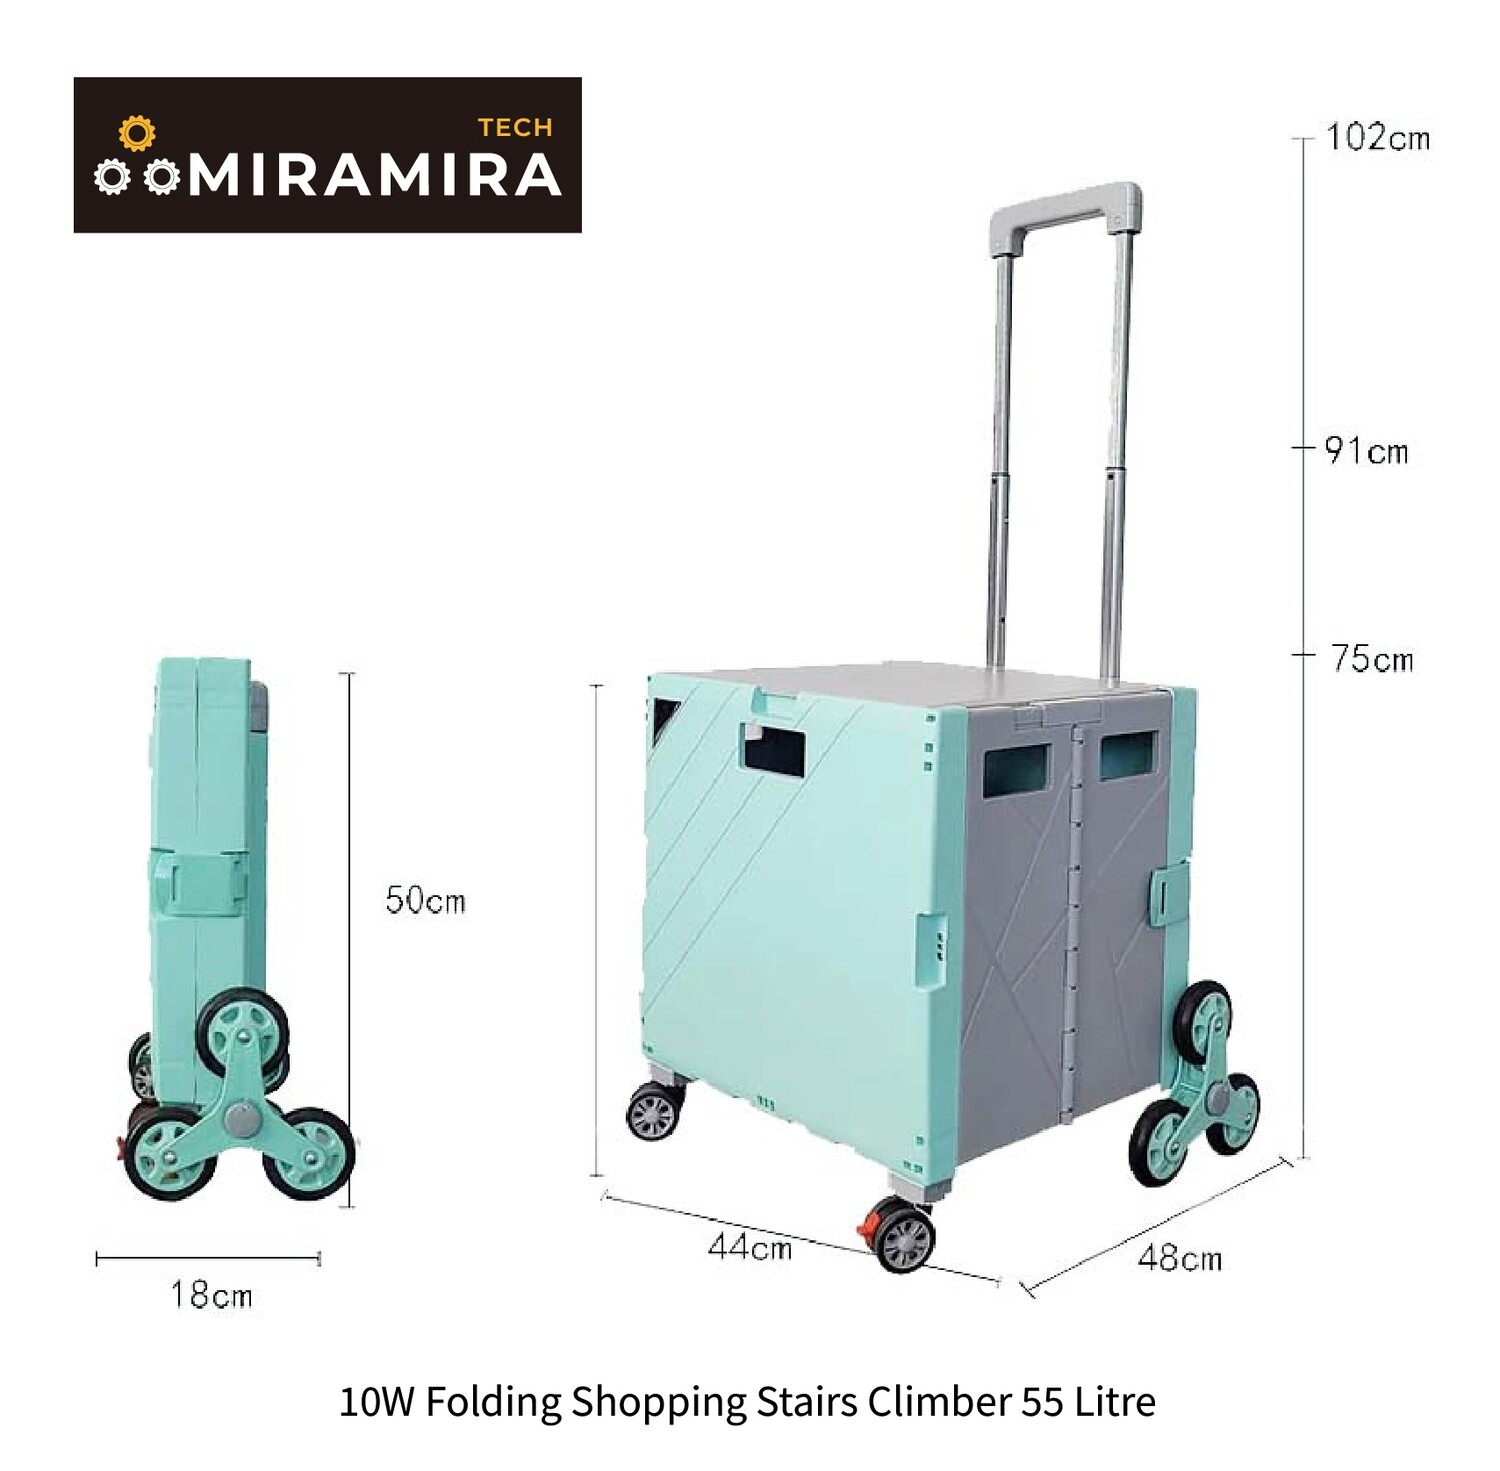 L0357 MiraMira 10W Folding Shopping Stairs Climber 55 Litre